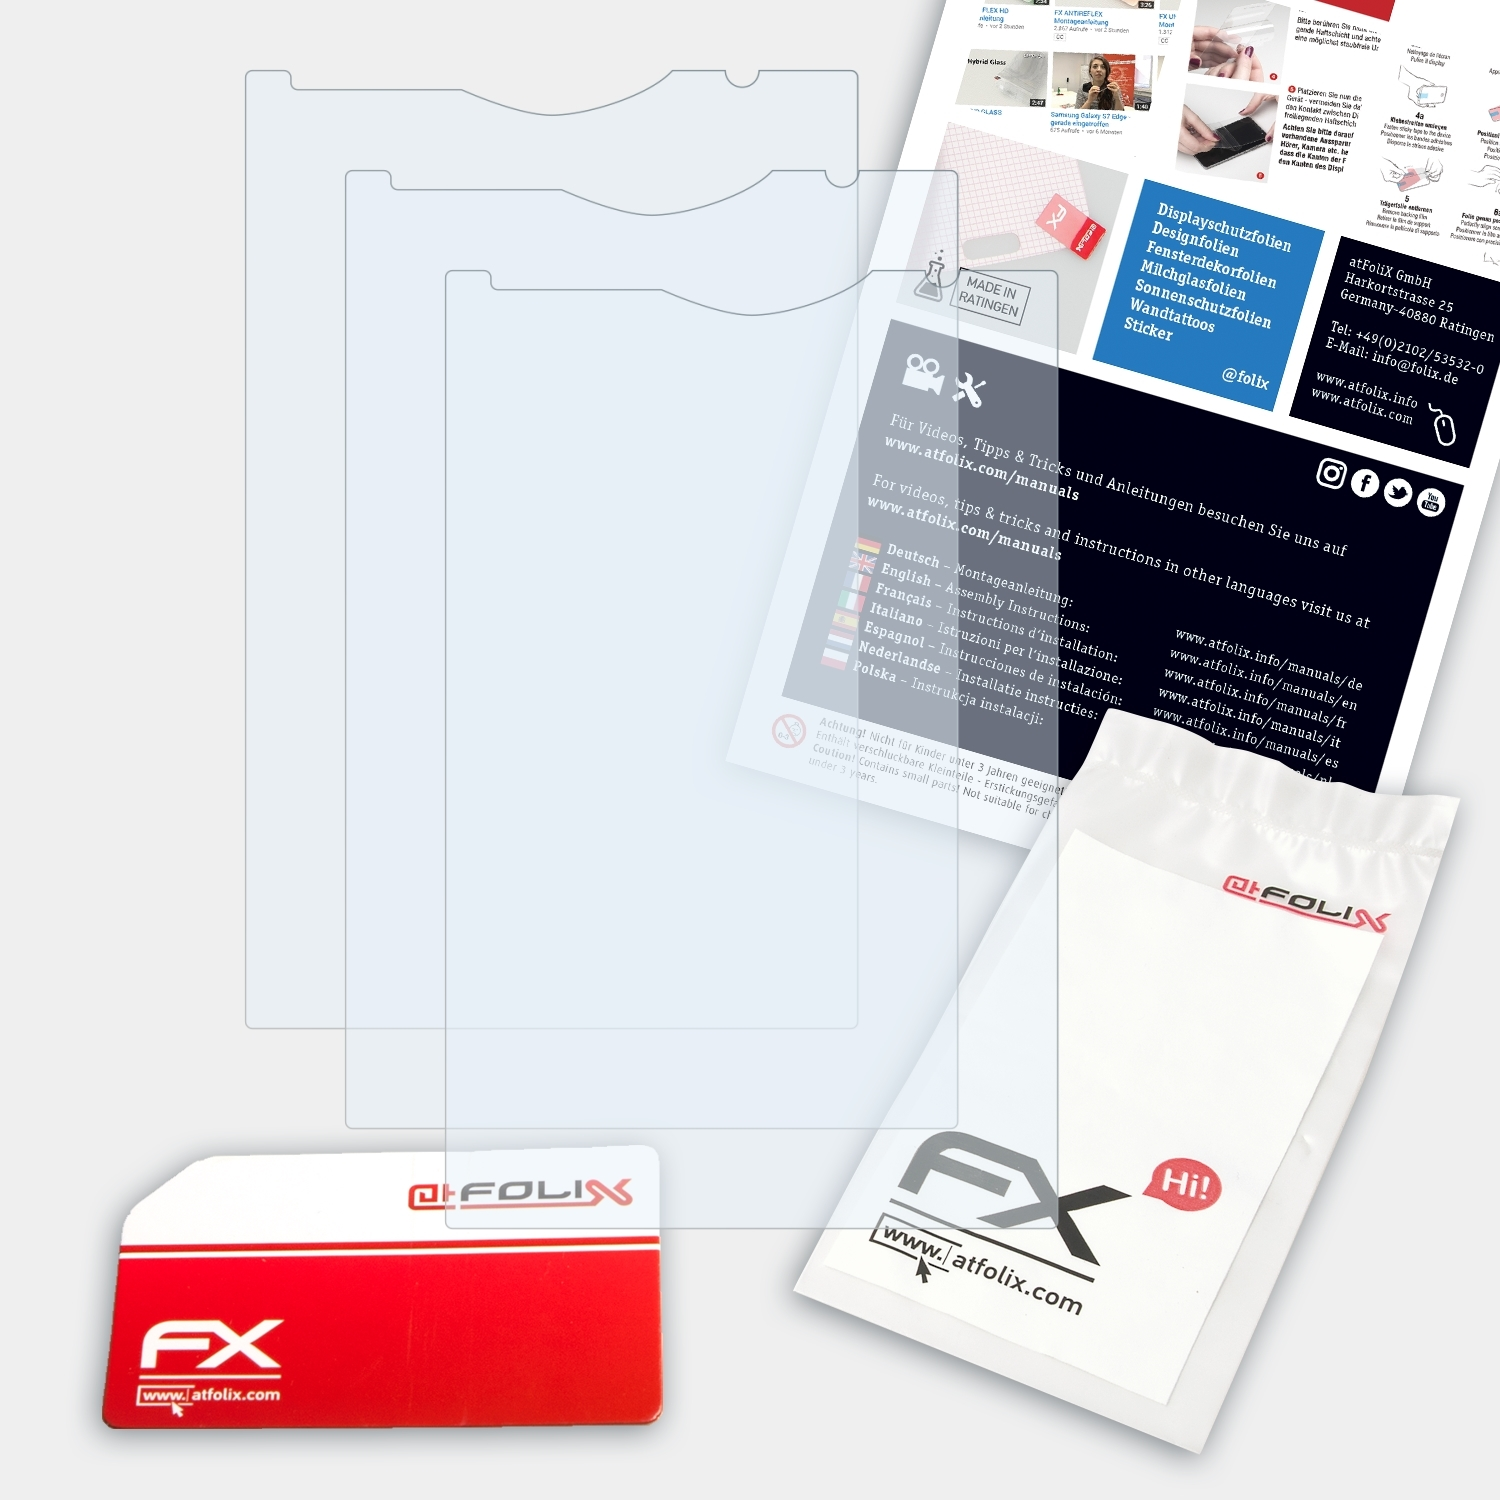 Xperia Displayschutz(für 3x X10 mini pro) ATFOLIX FX-Clear Sony-Ericsson